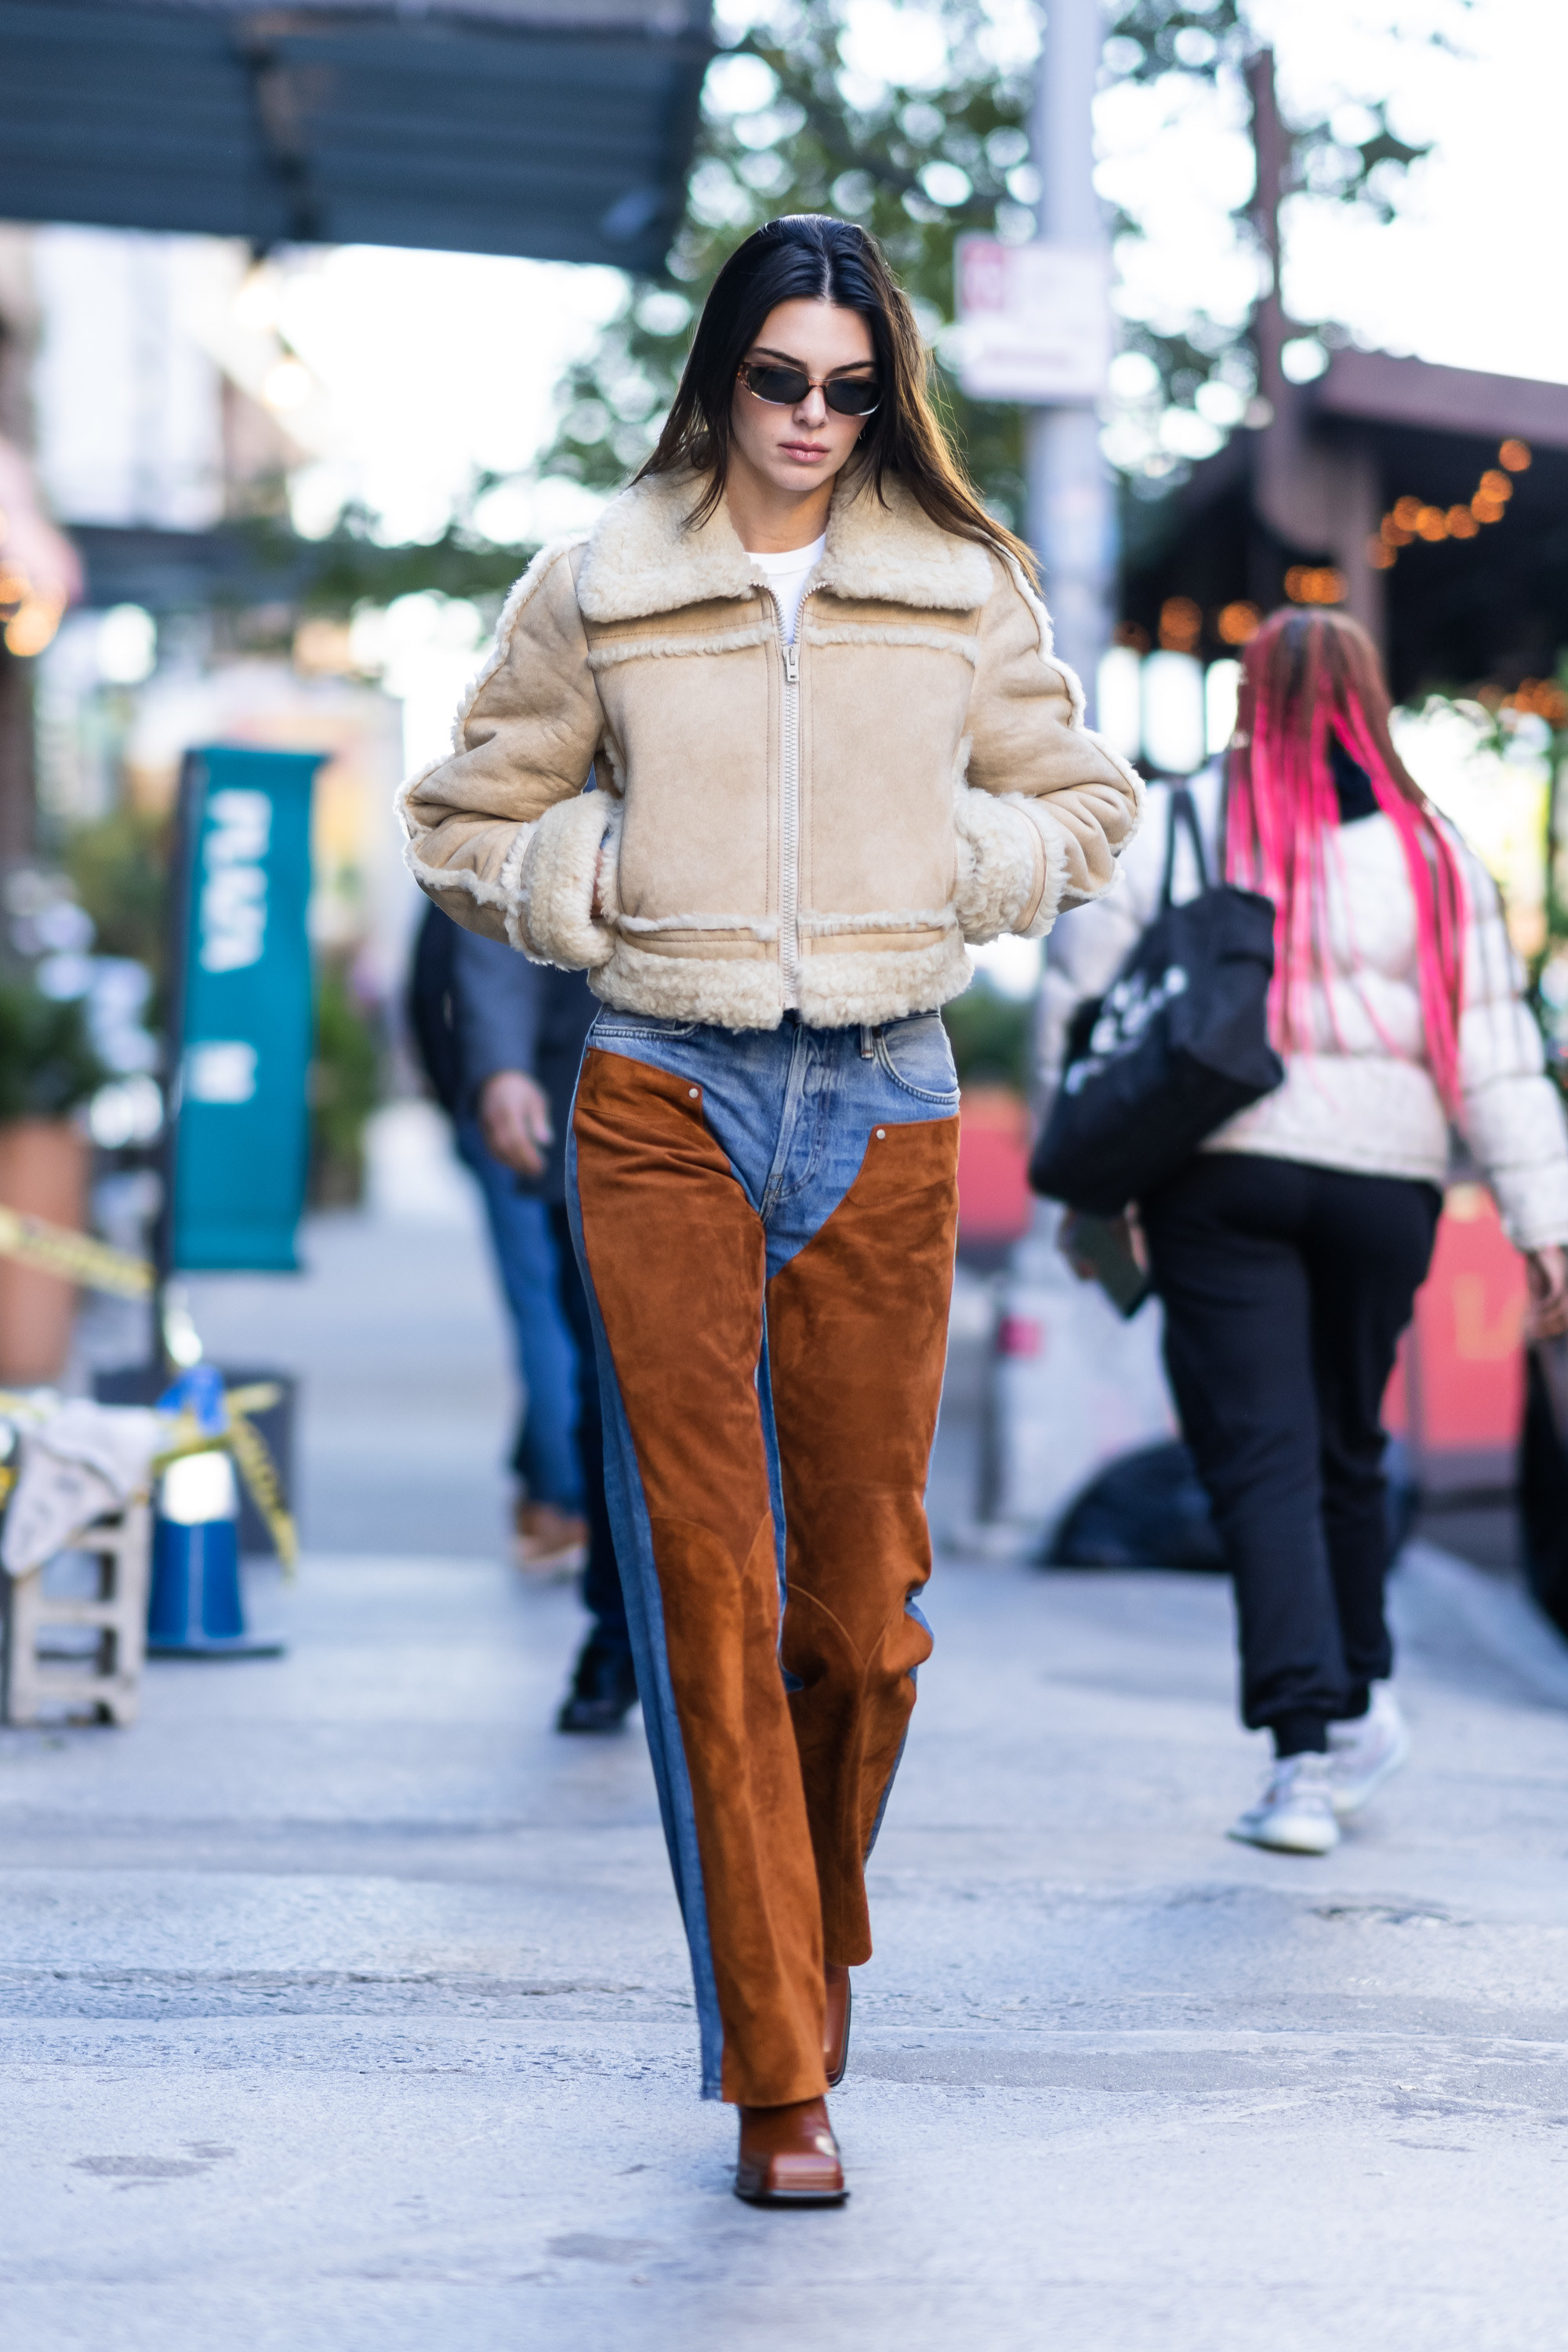 Kendall Jenner walking down the street